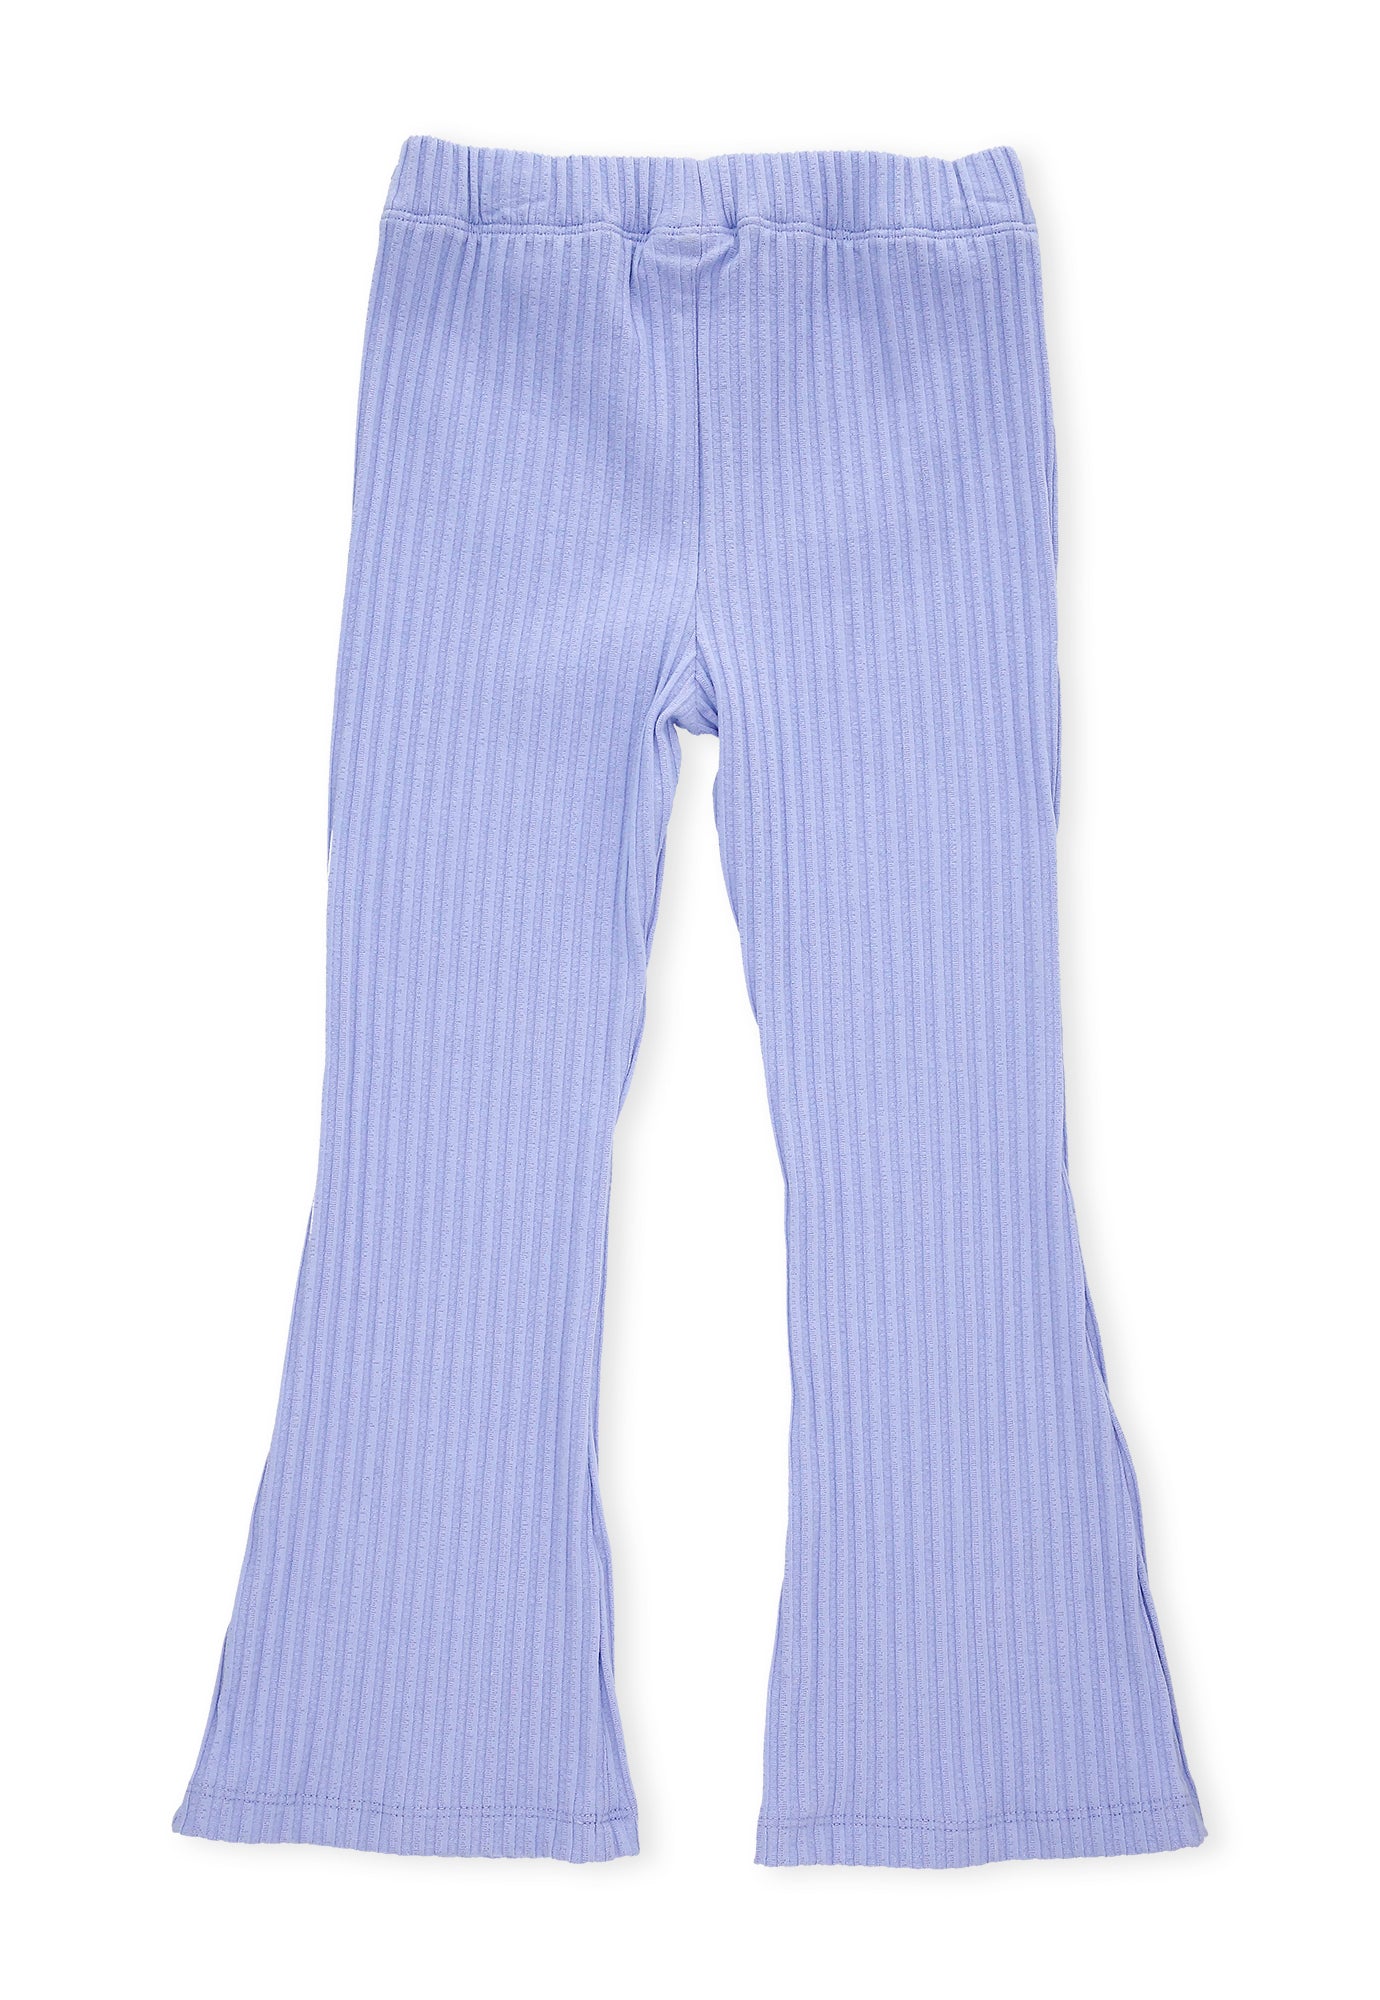 Pantalón morado lavanda fondo entero, con bota ancha y pretina resortada para bebé niña